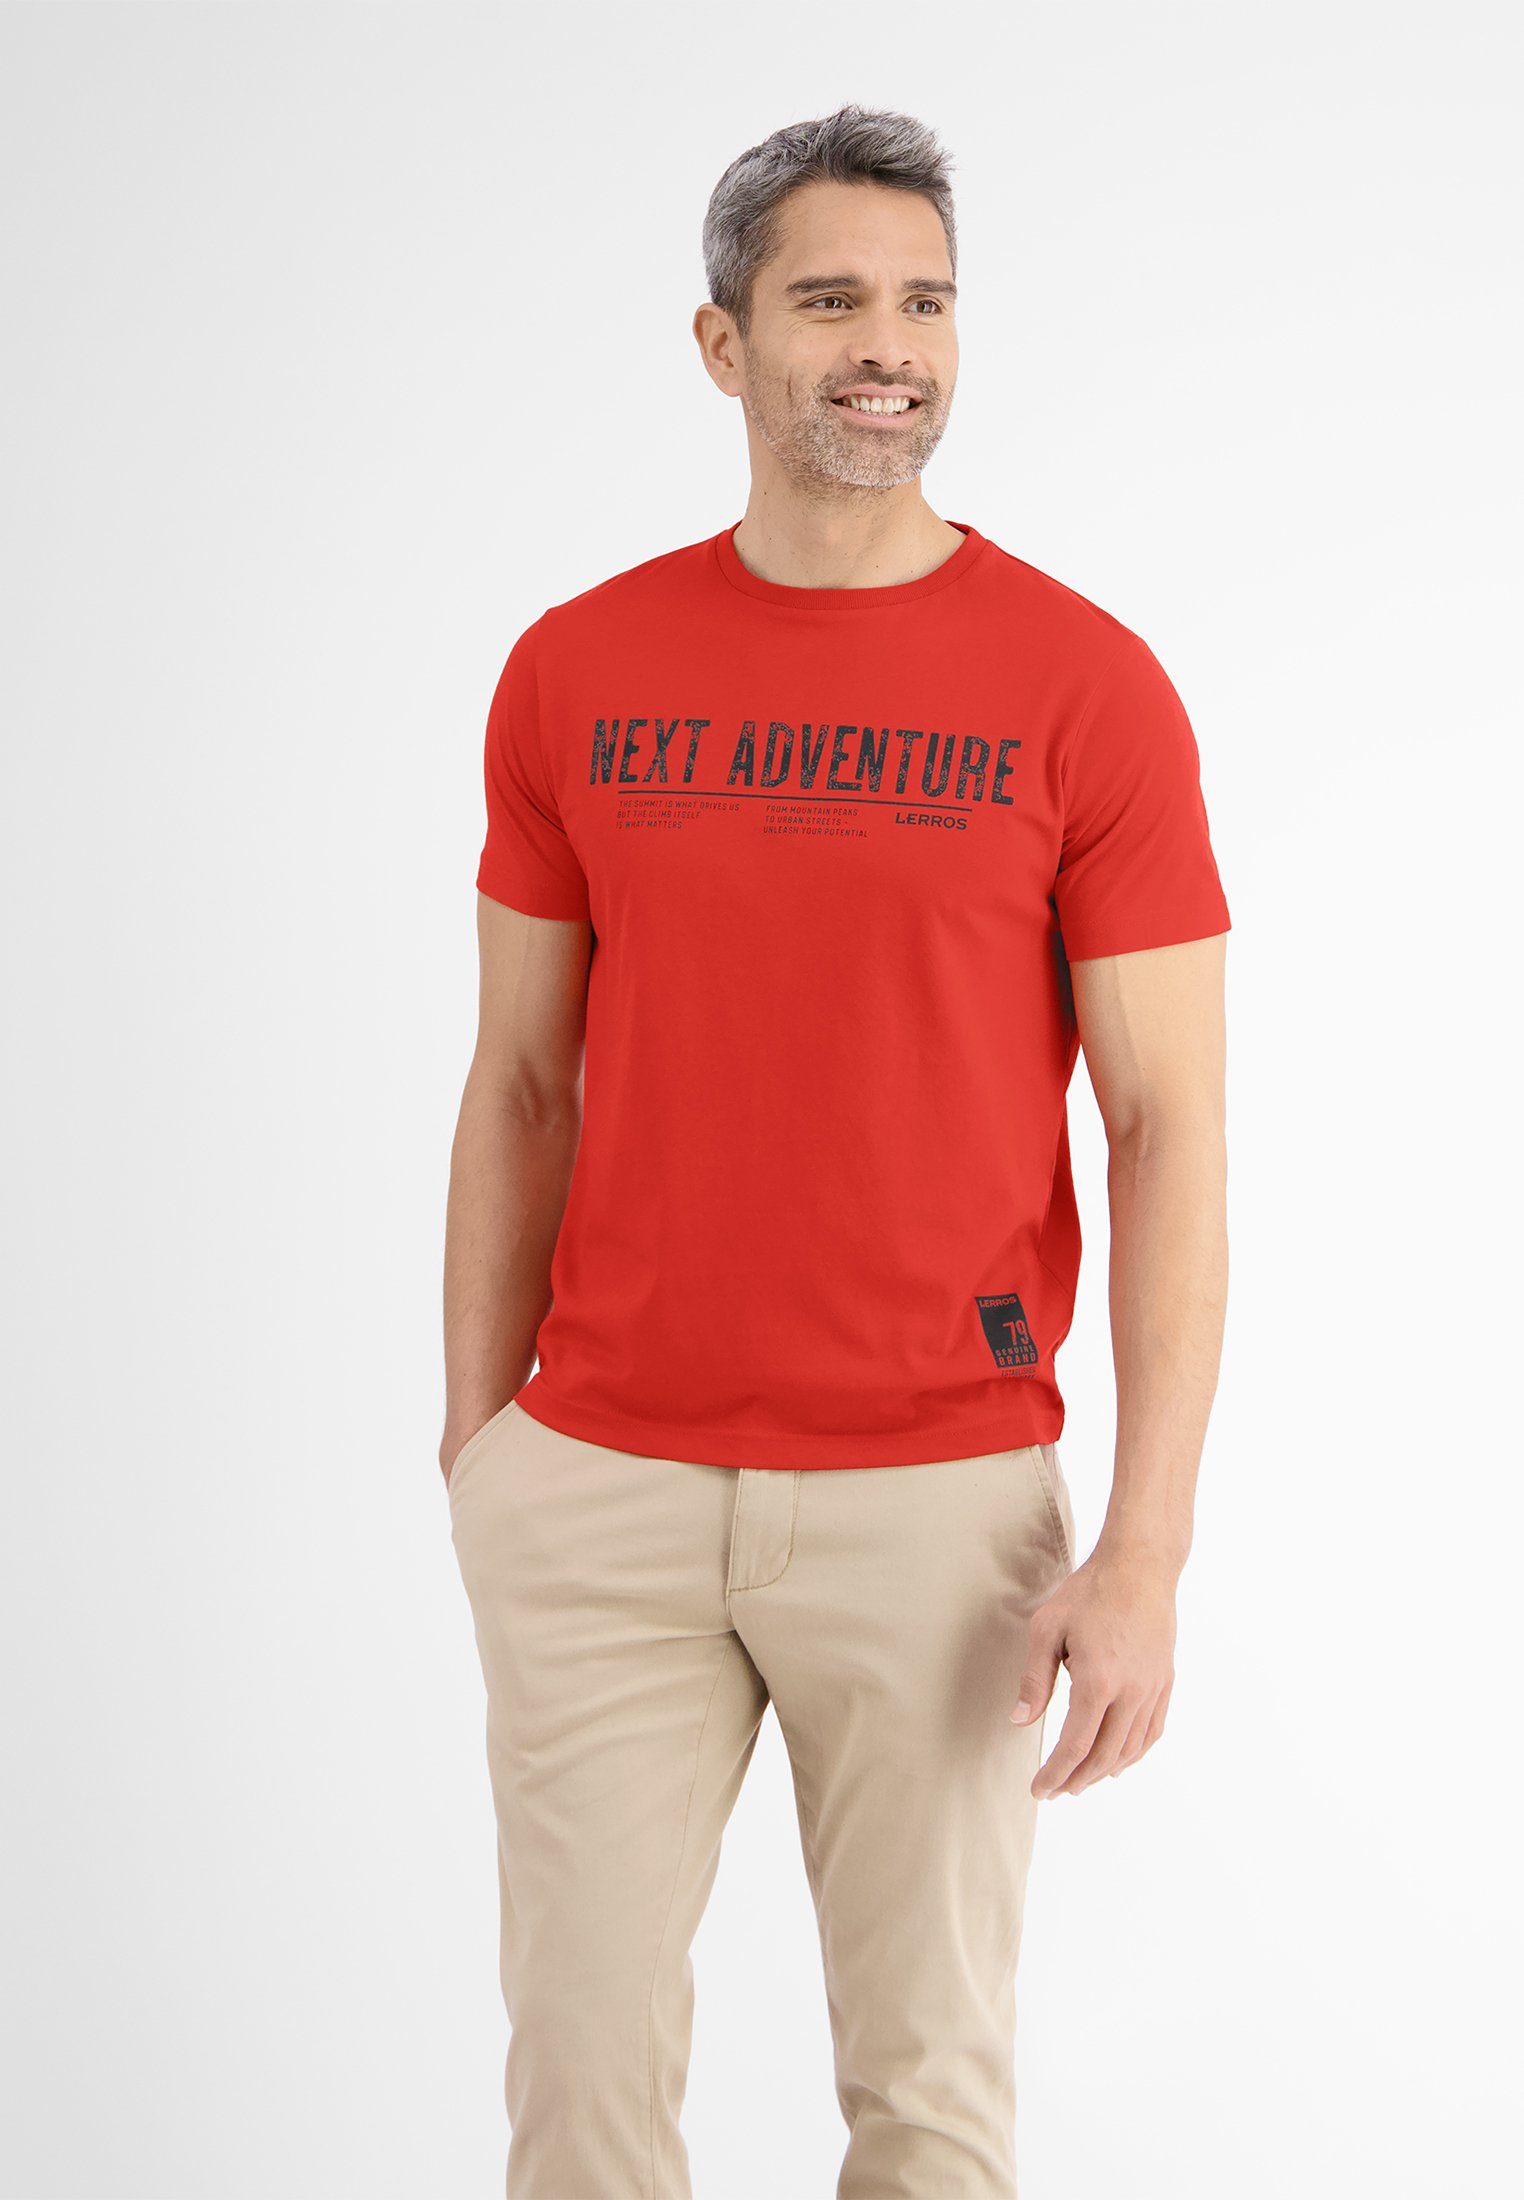 LERROS *Next RED T-Shirt T-Shirt Adventure* LERROS LAVA